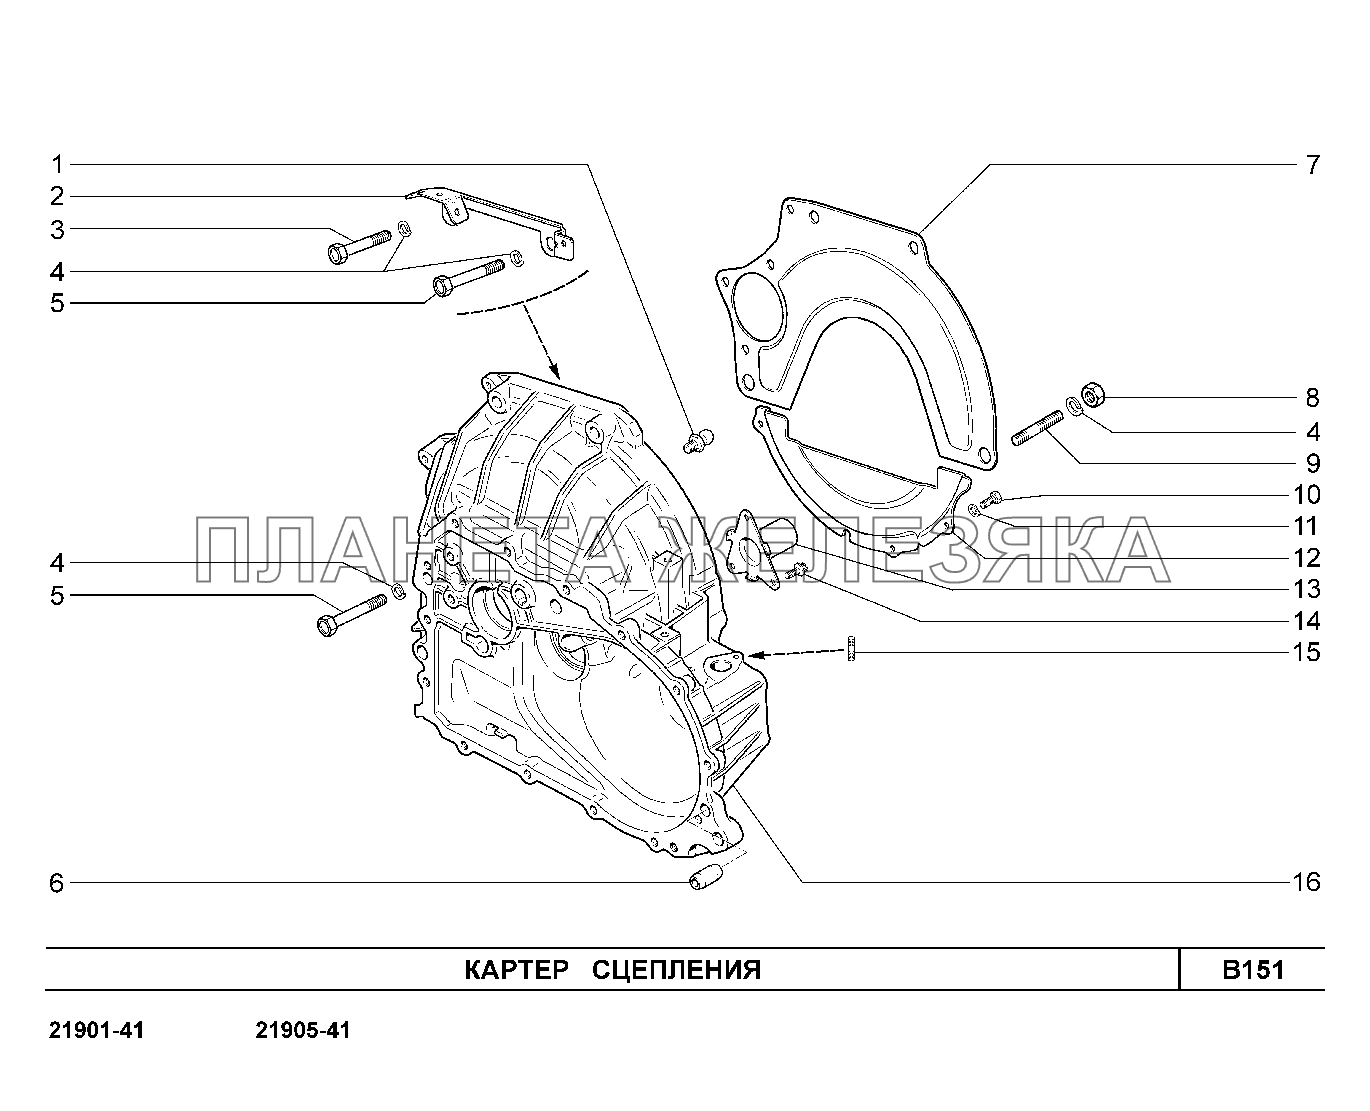 B151. Картер сцепления Lada Granta-2190